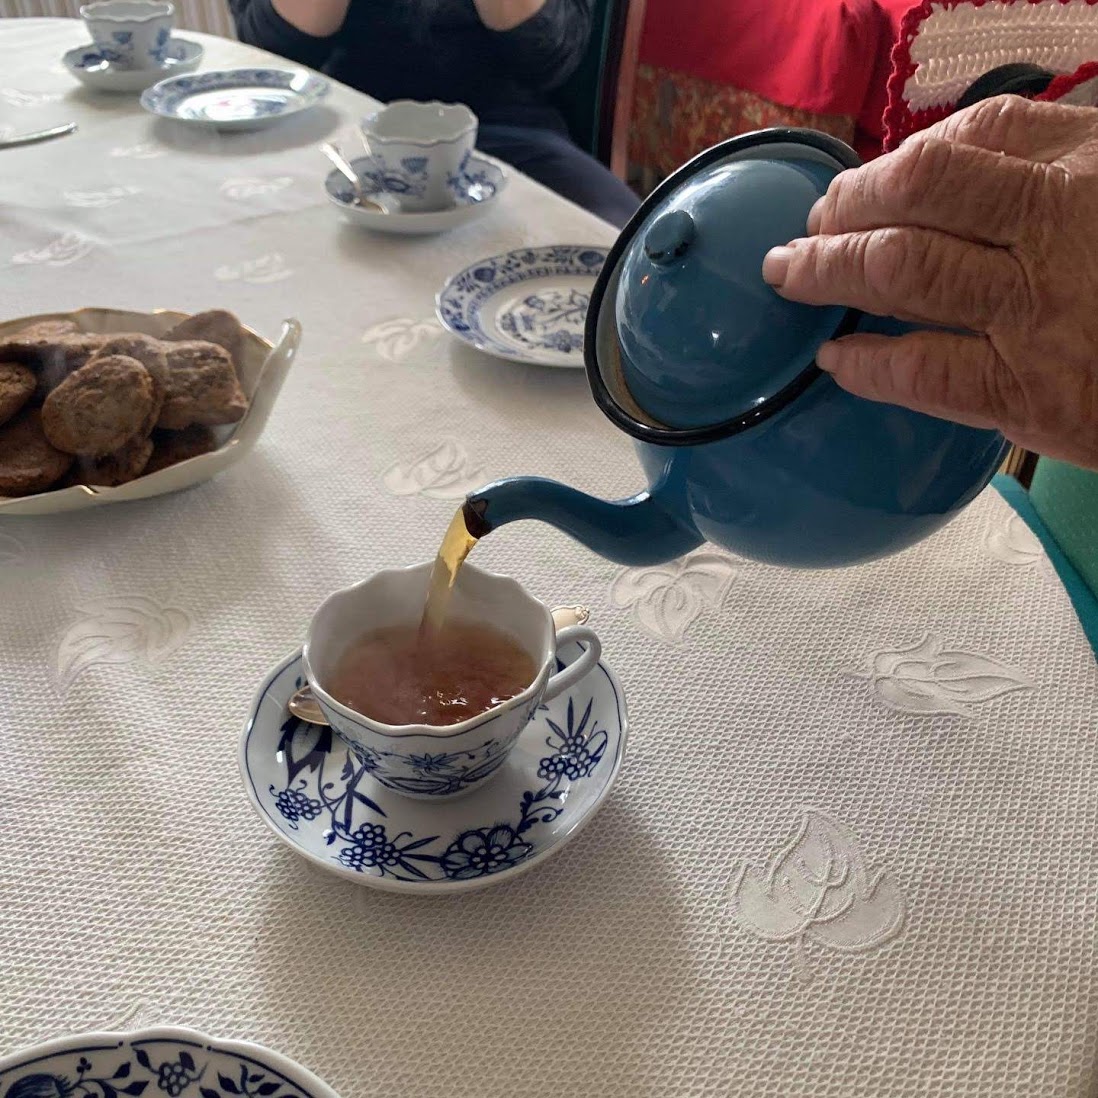 a person pouring tea into a cup